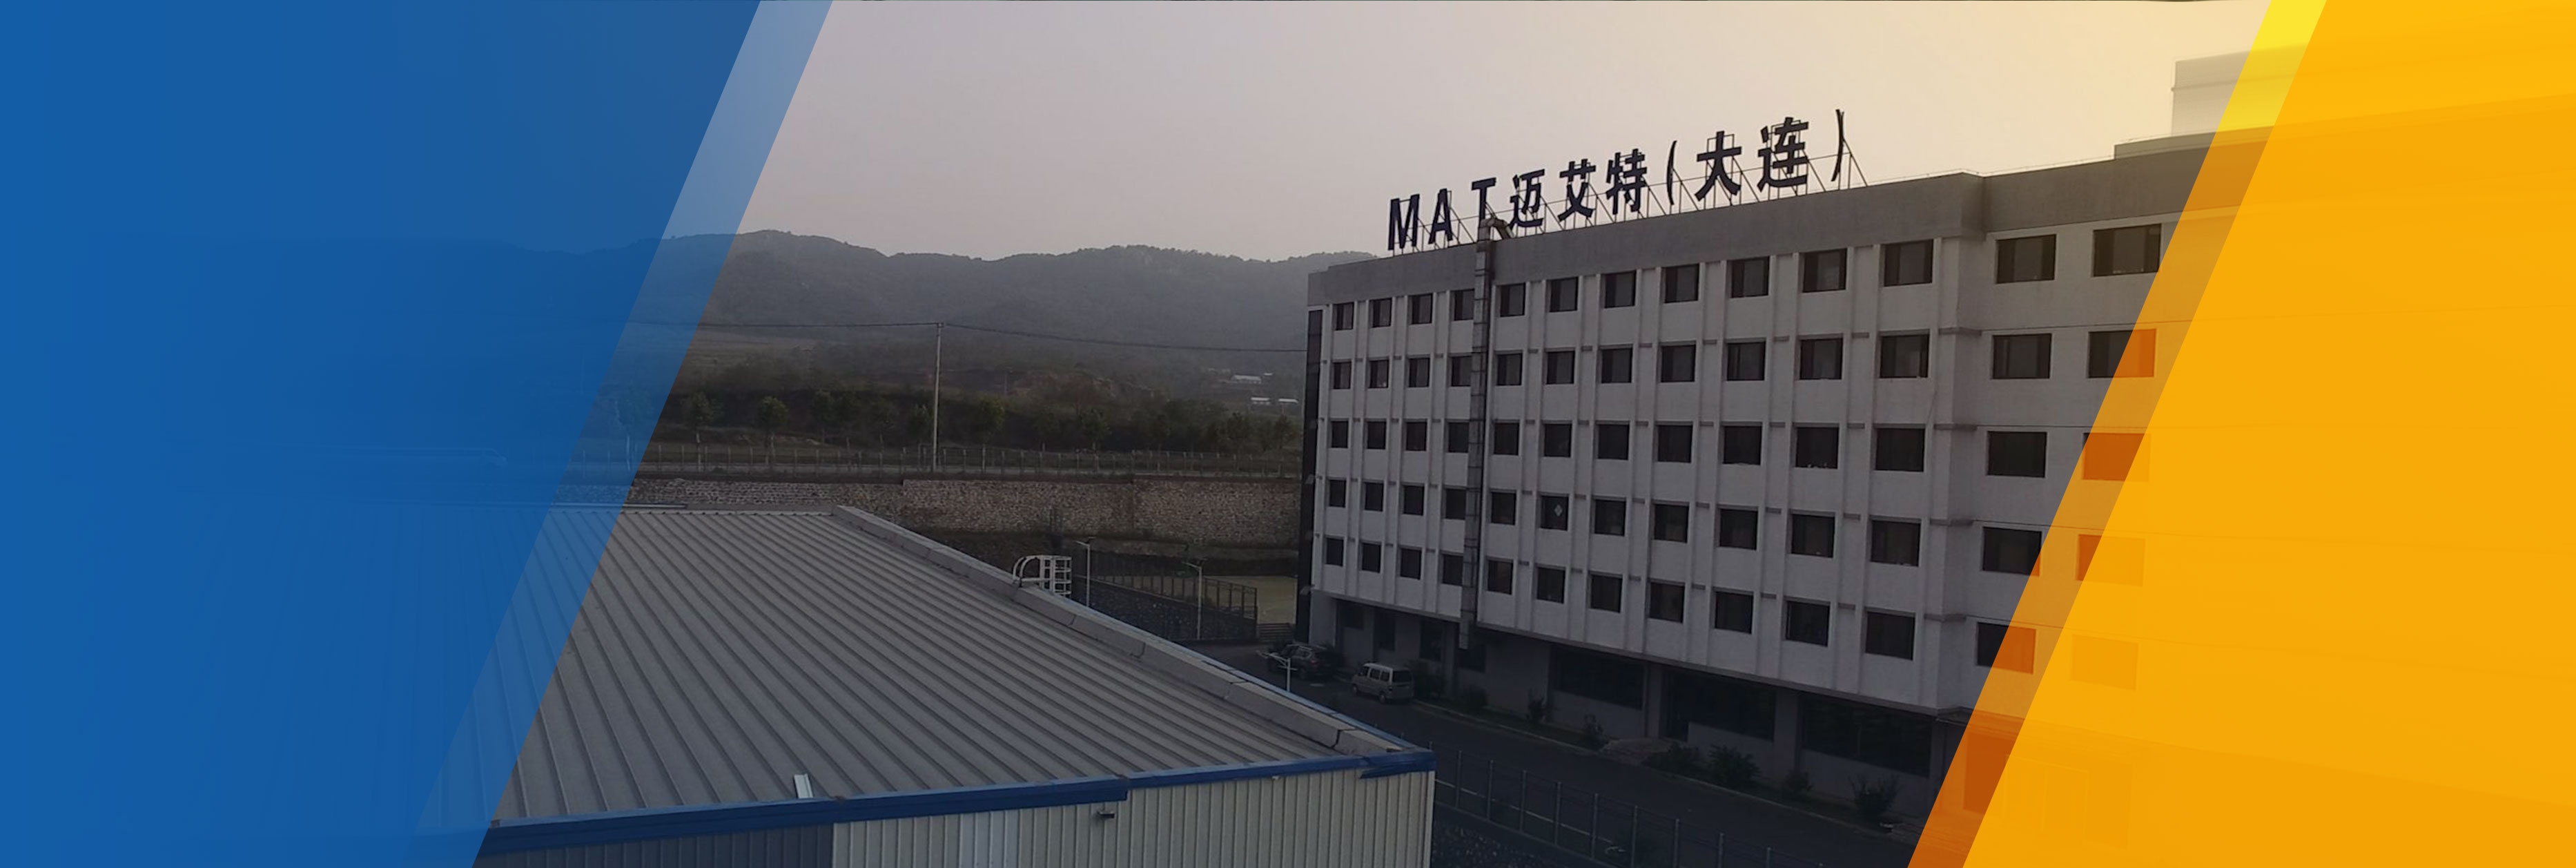 MAT Dalian Auto Parts Site - MAT Foundry